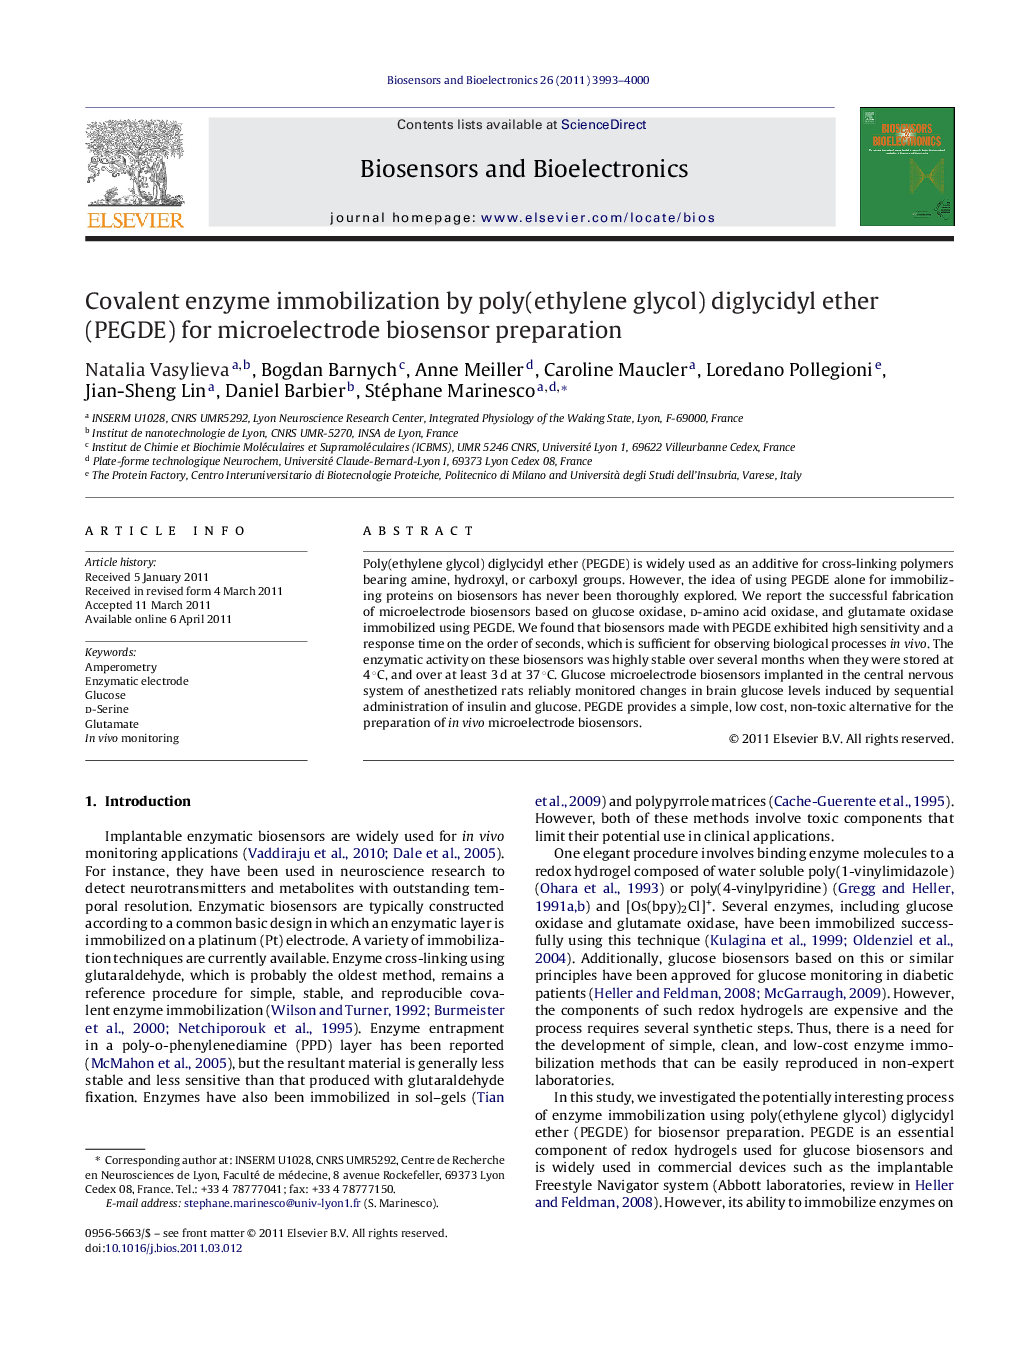 Covalent enzyme immobilization by poly(ethylene glycol) diglycidyl ether (PEGDE) for microelectrode biosensor preparation